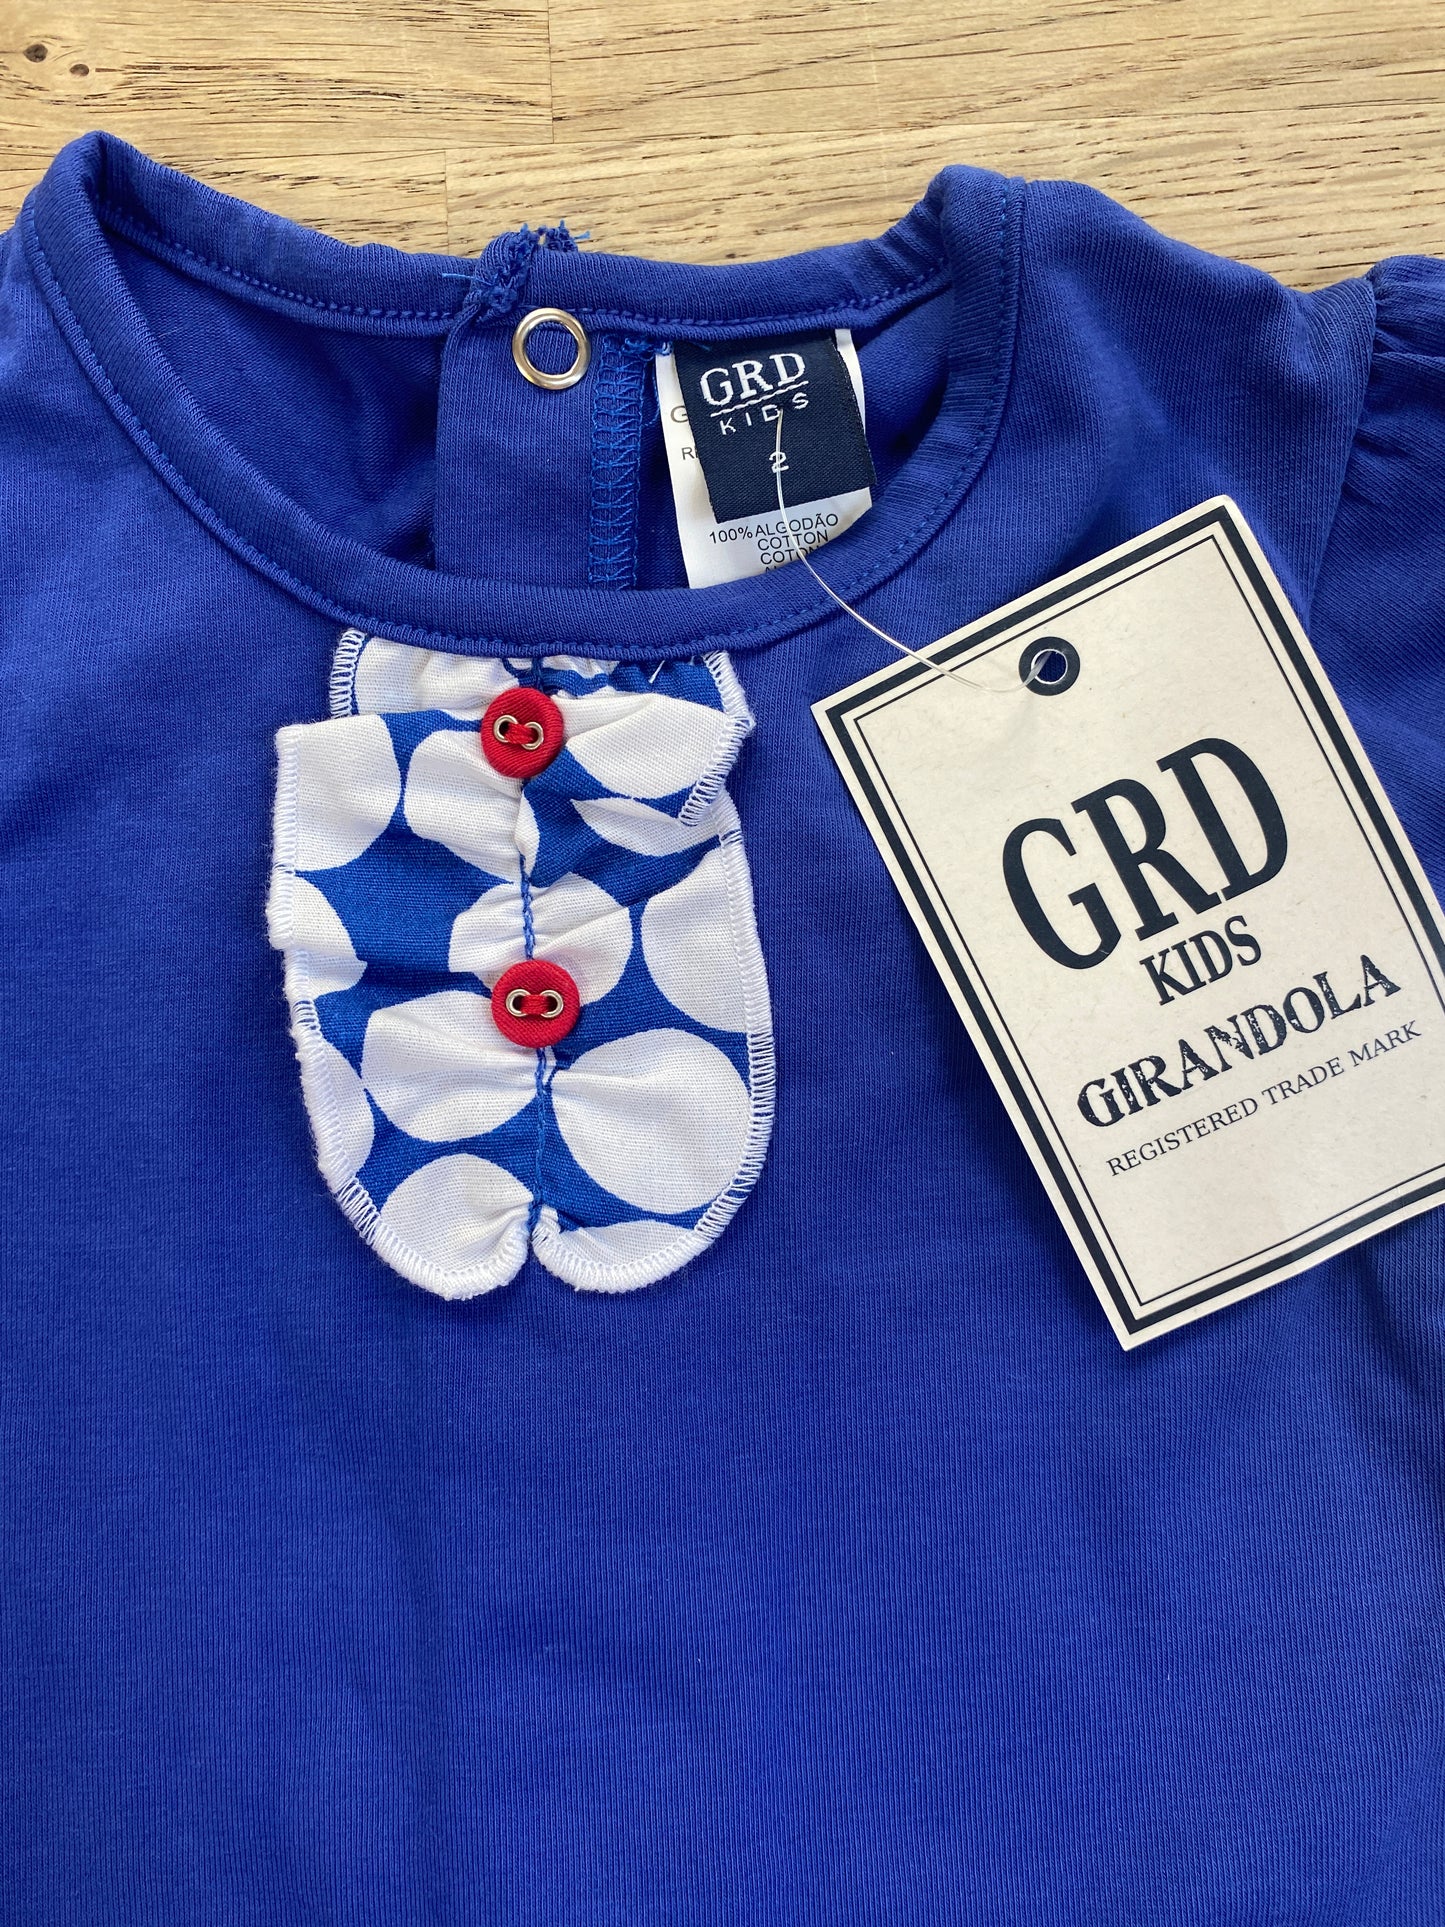 Girandola Blue & White Polka Dot Dress - 2t (Pre-Loved) - by GRD Kids